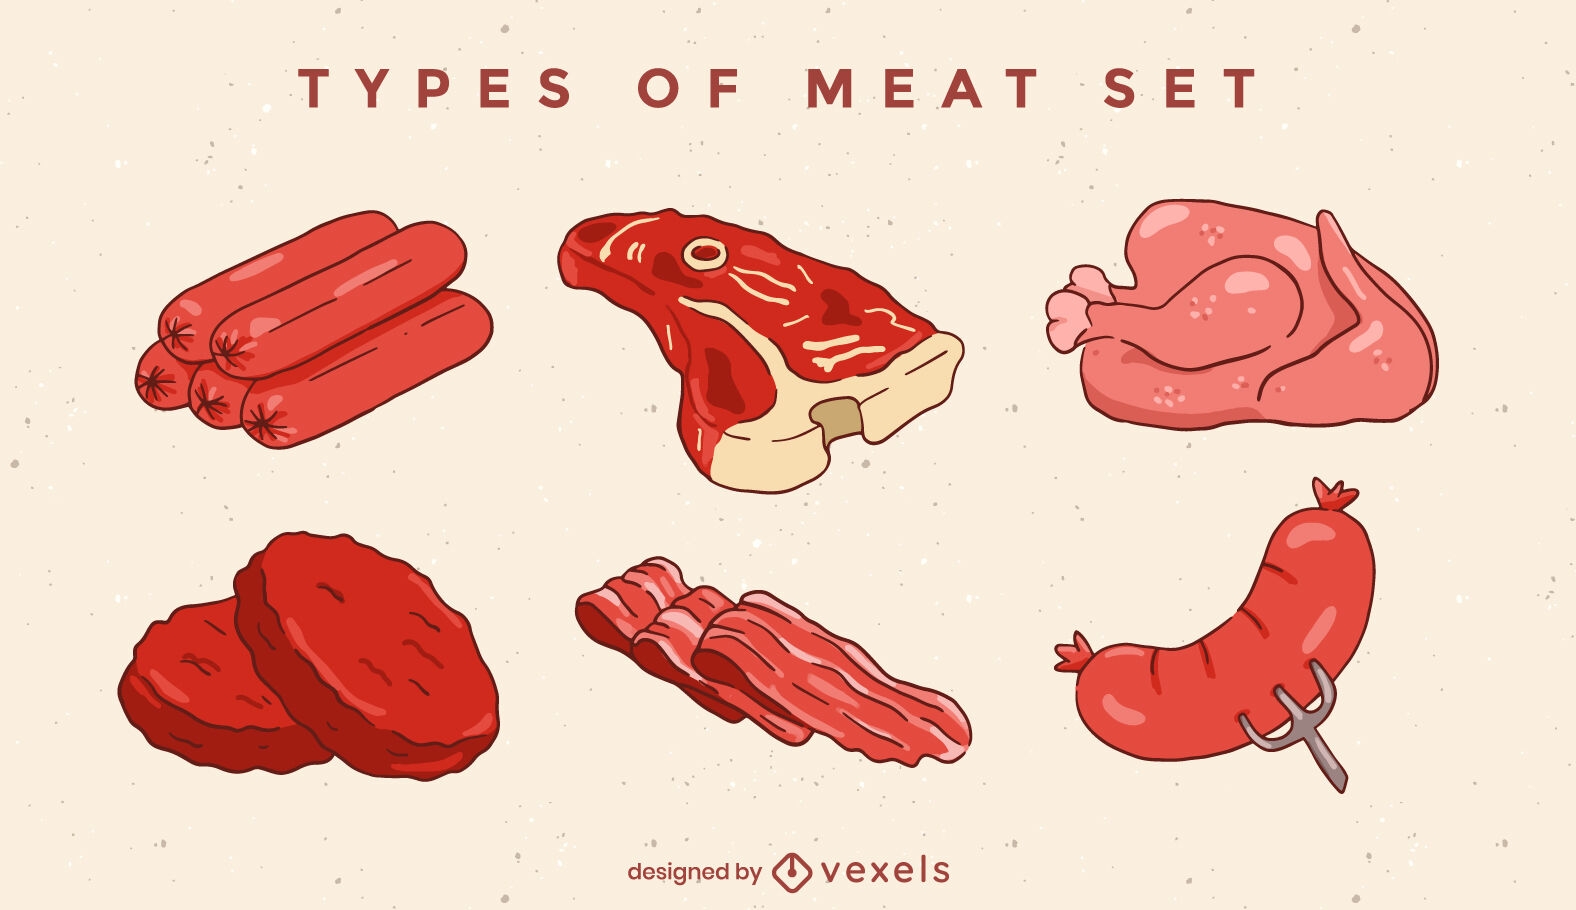 Types of meat set design